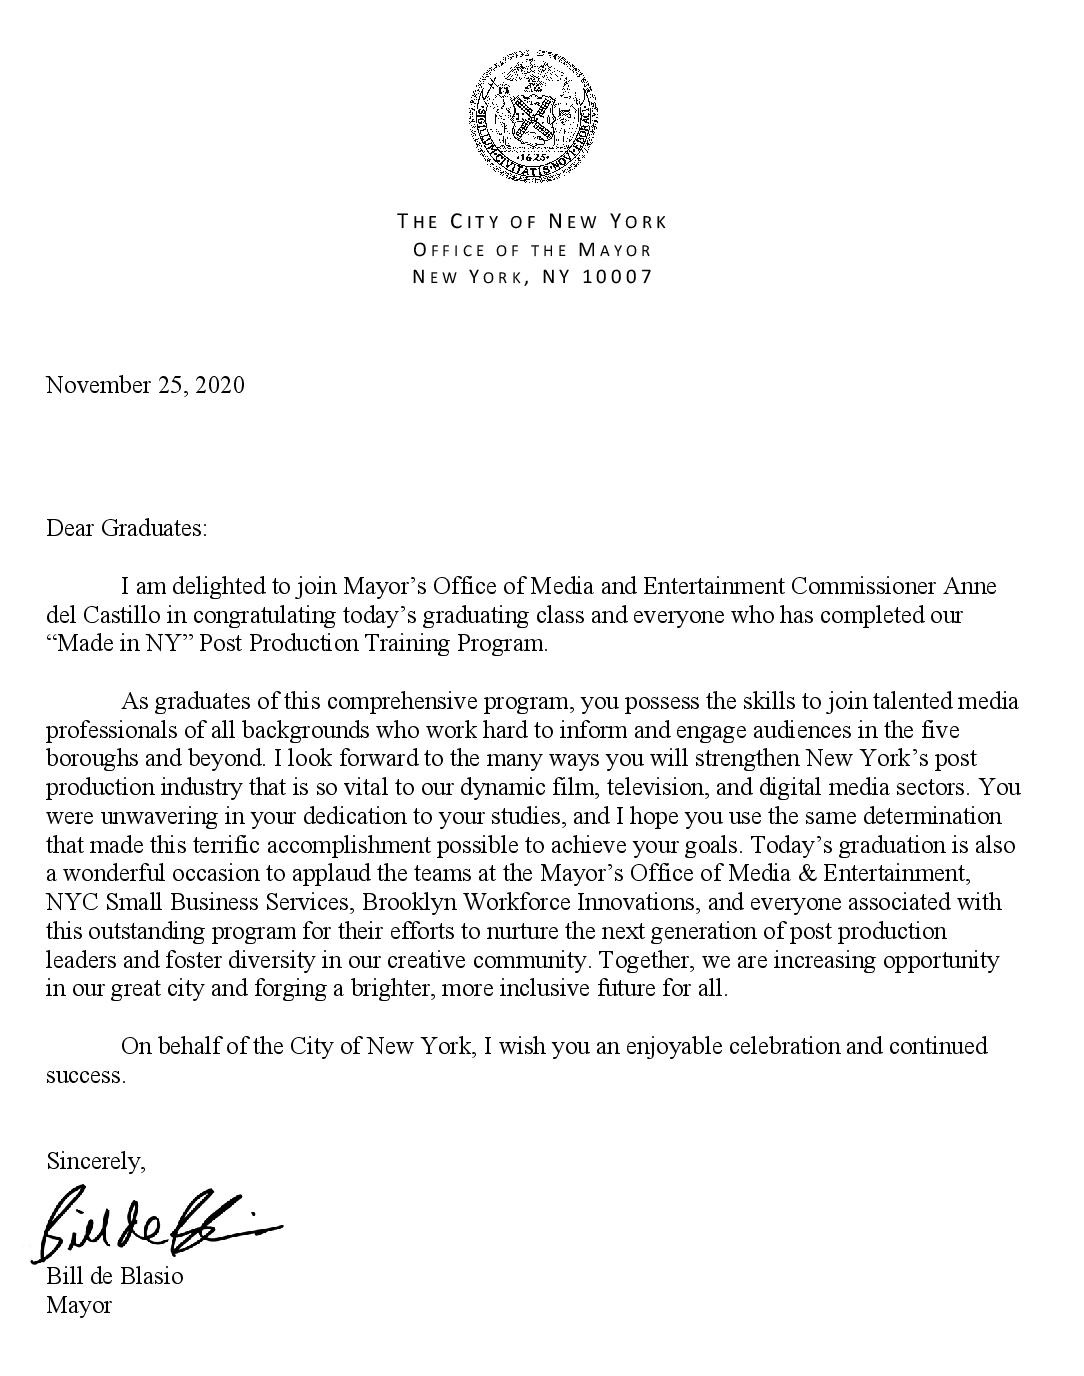 Mayor Bill de Blasio's letter congratulating the post production graduates